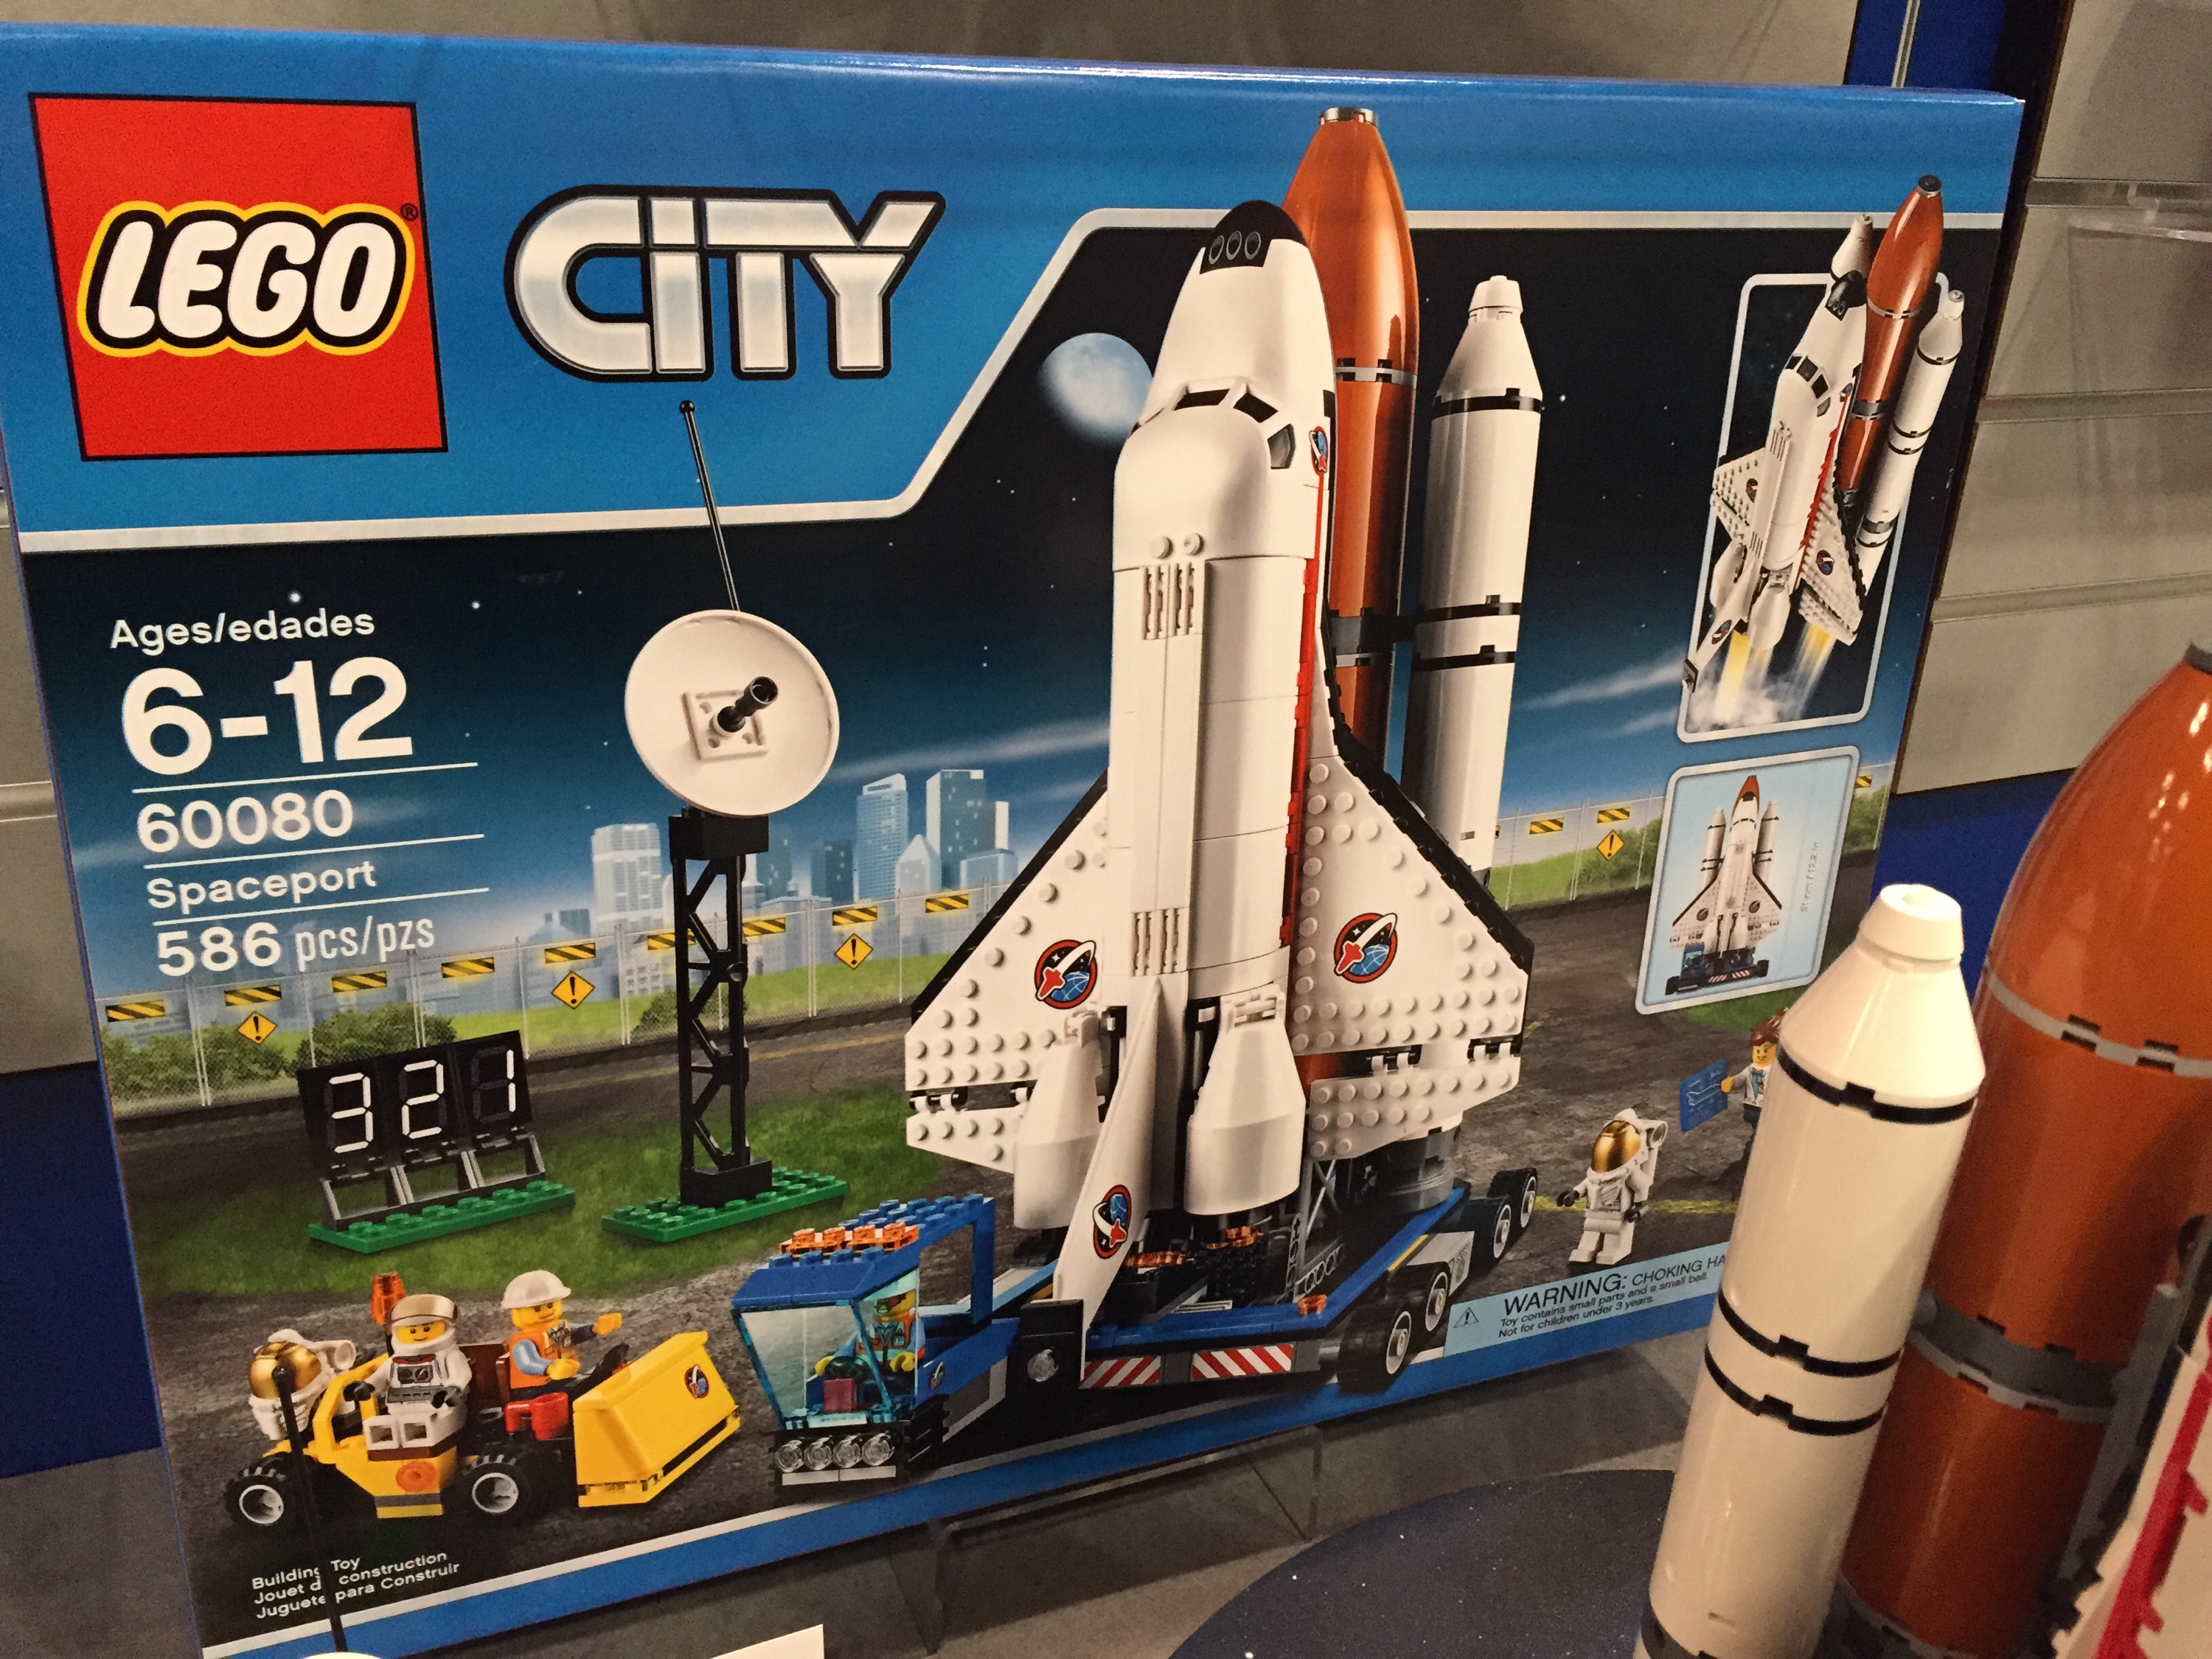 Torden dash Alabama LEGO Spaceport 60080 Summer 2015 Set Photos Preview! - Bricks and Bloks